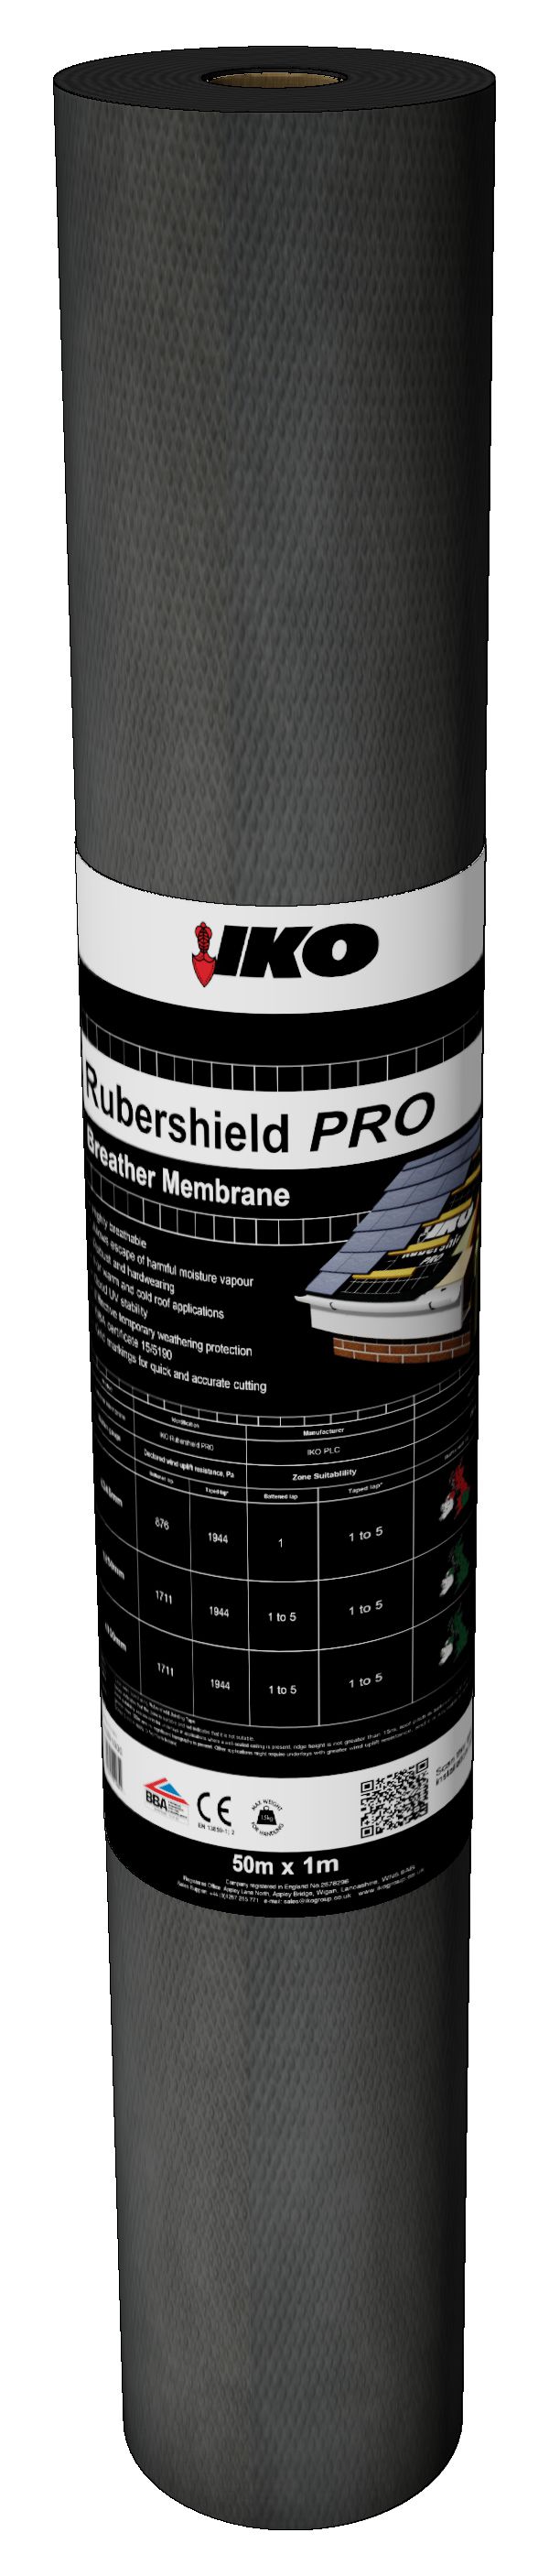 Image of IKO Rubershield Pro 140g/sqm Roofing Membrane - 50 x 1m